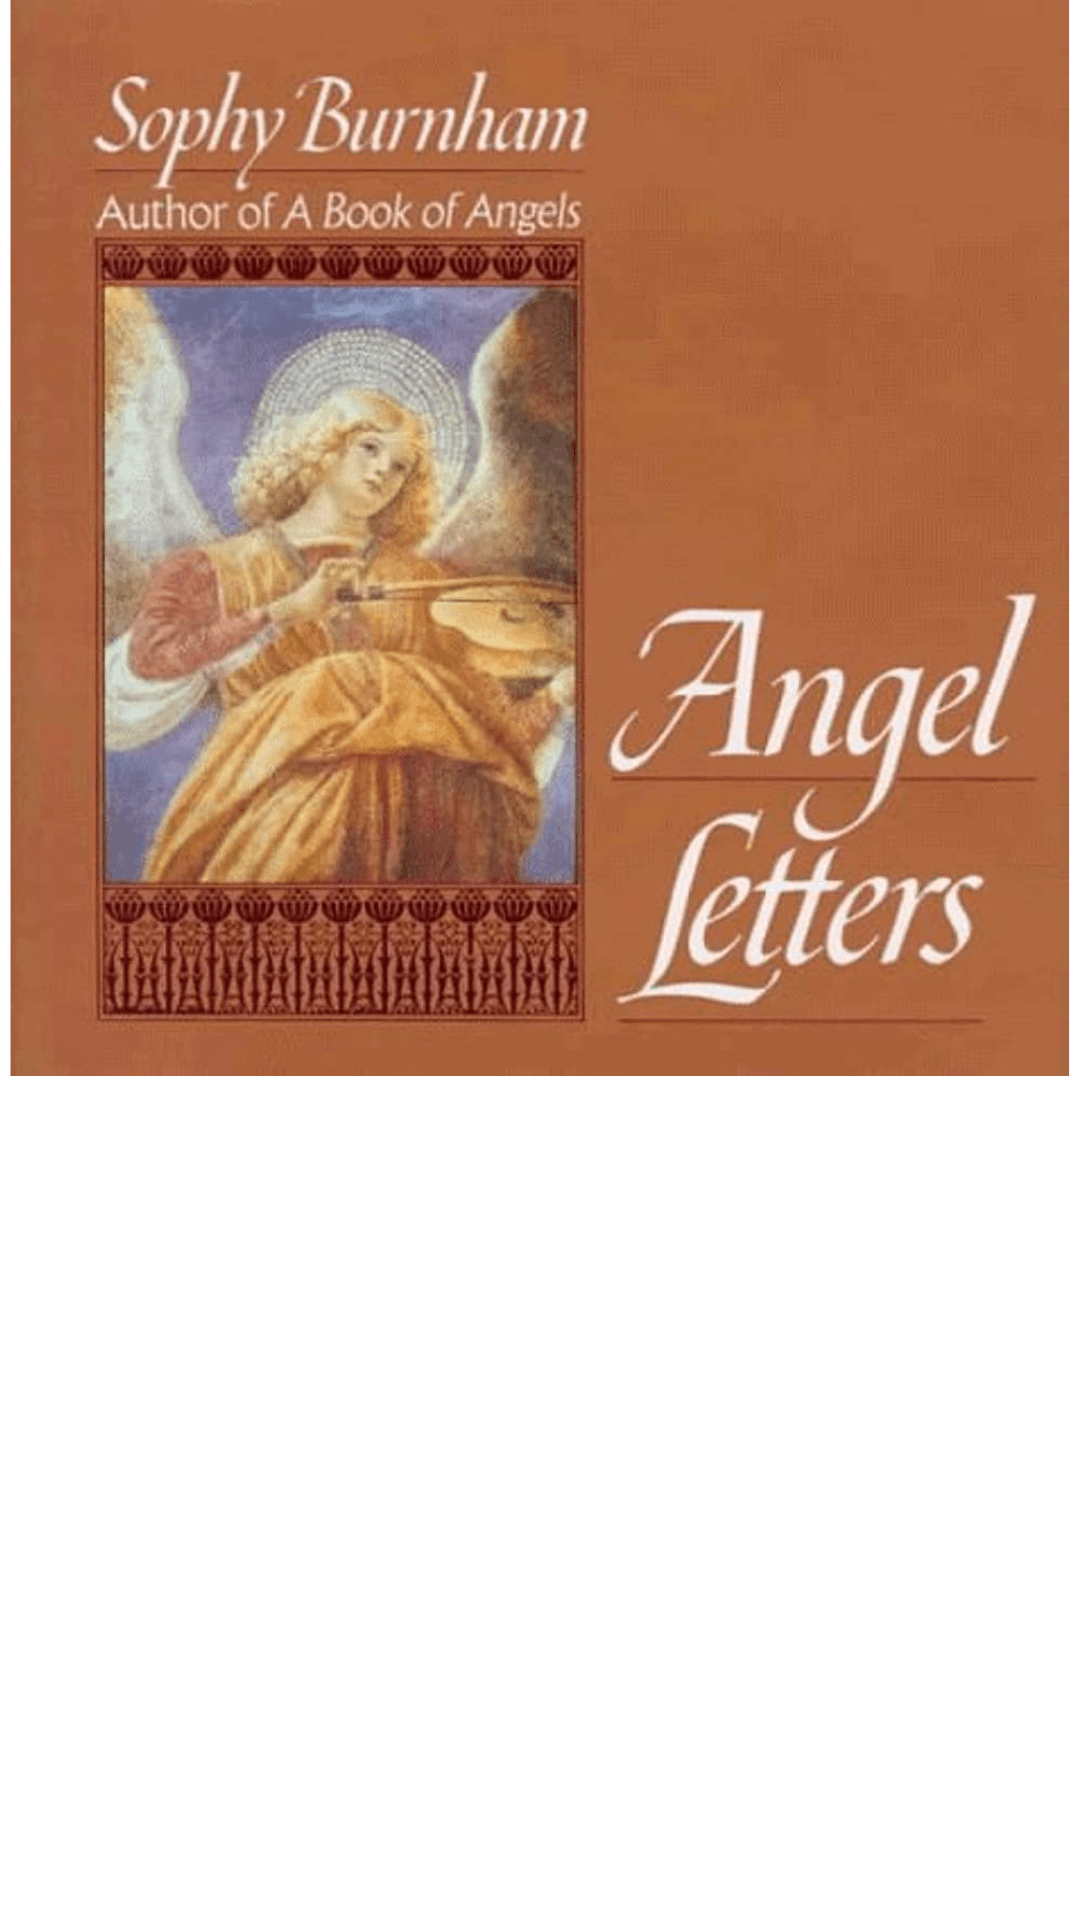 Angel Letters by Sophy Burnham